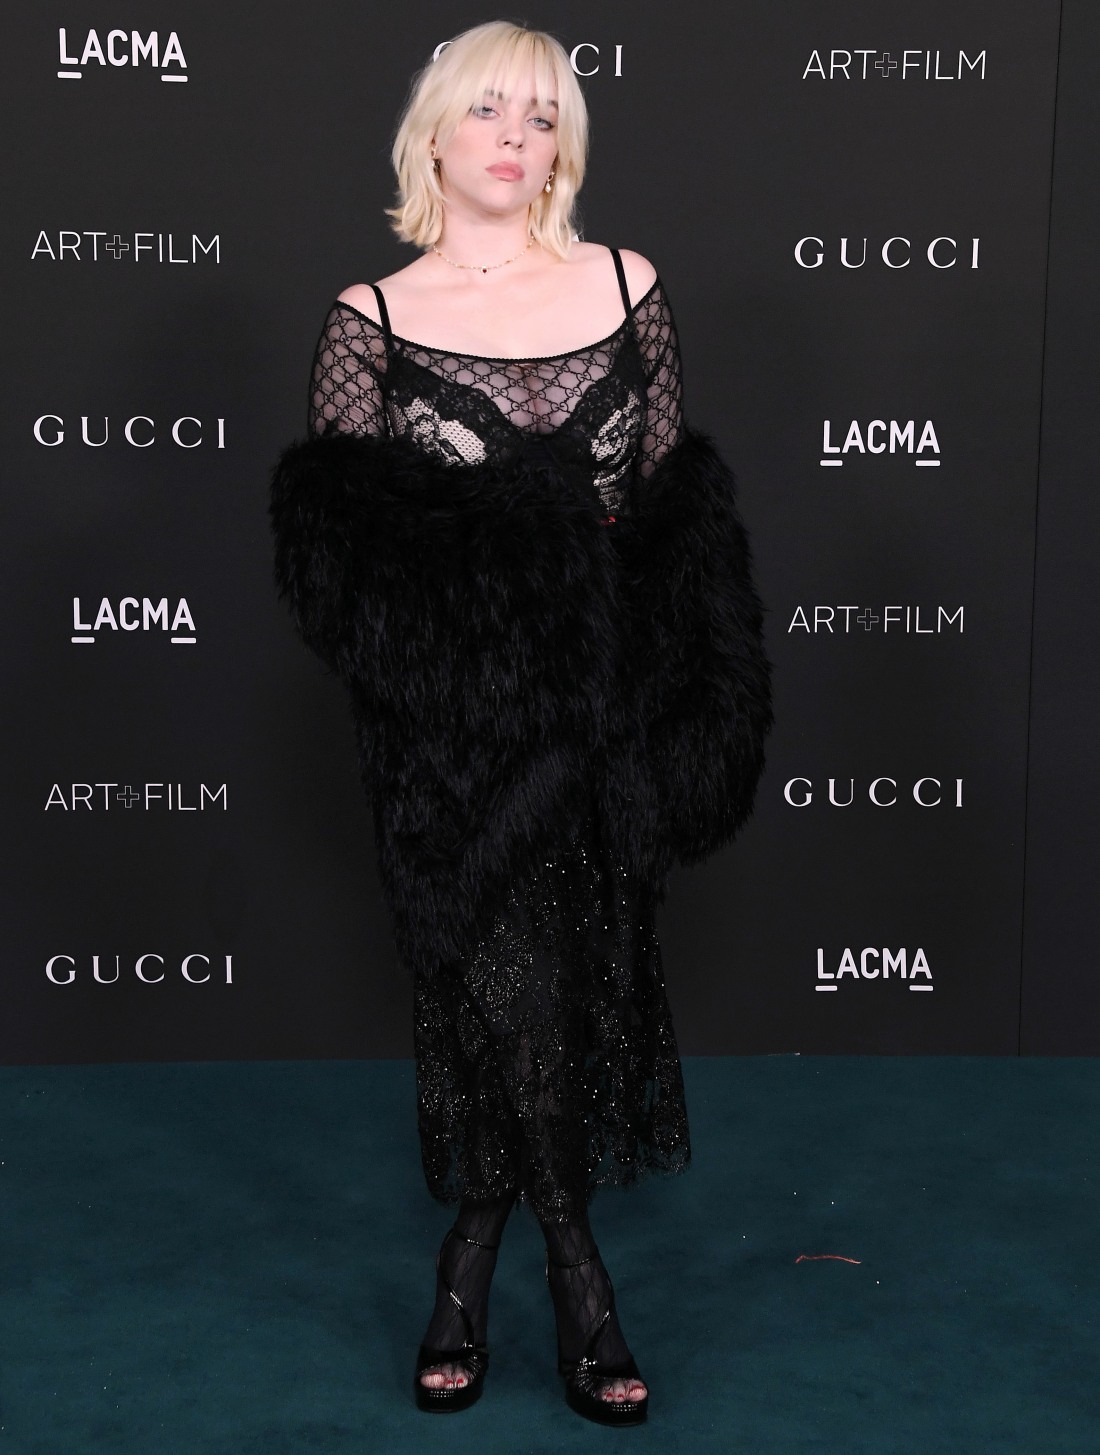 10th Annual LACMA ART+FILM GALA Presented By Gucci